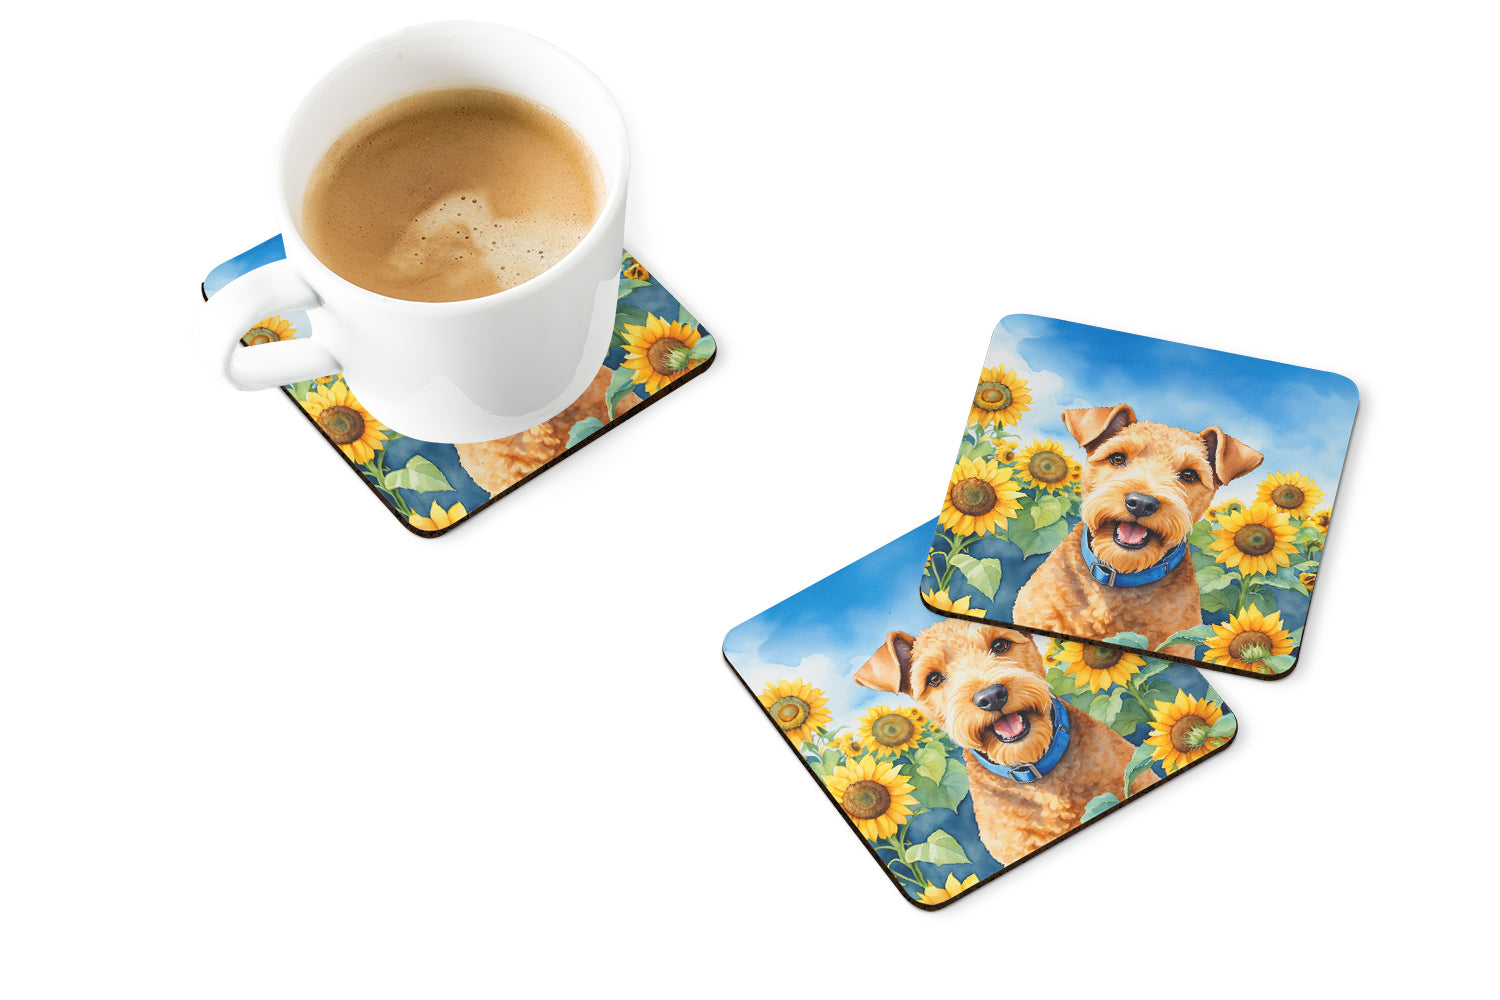 Lakeland Terrier in Sunflowers Foam Coasters